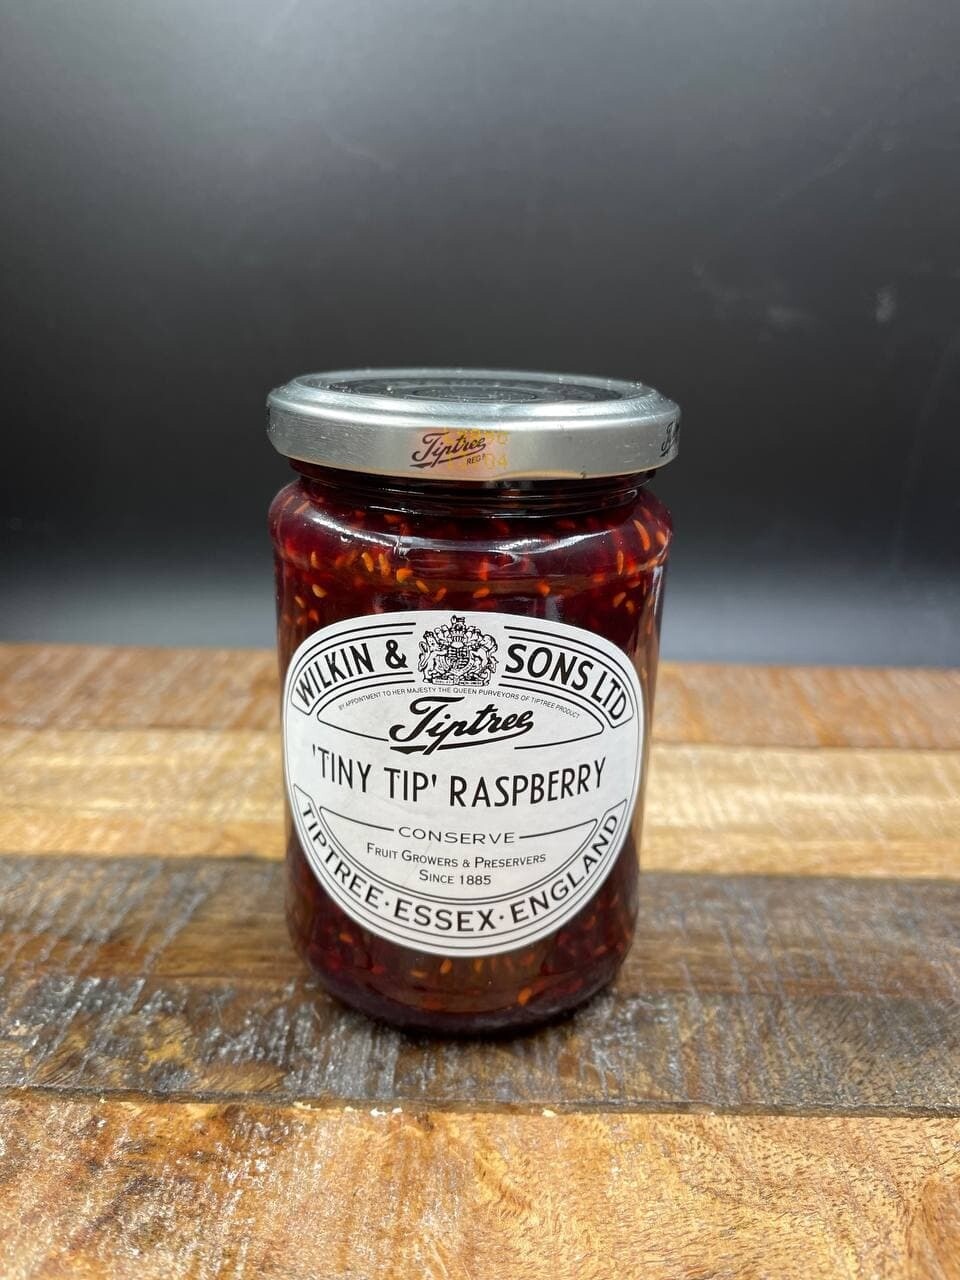 Wilkin & Sons Ltd TipTree Tiny Tip Raspberry Conserve 340g